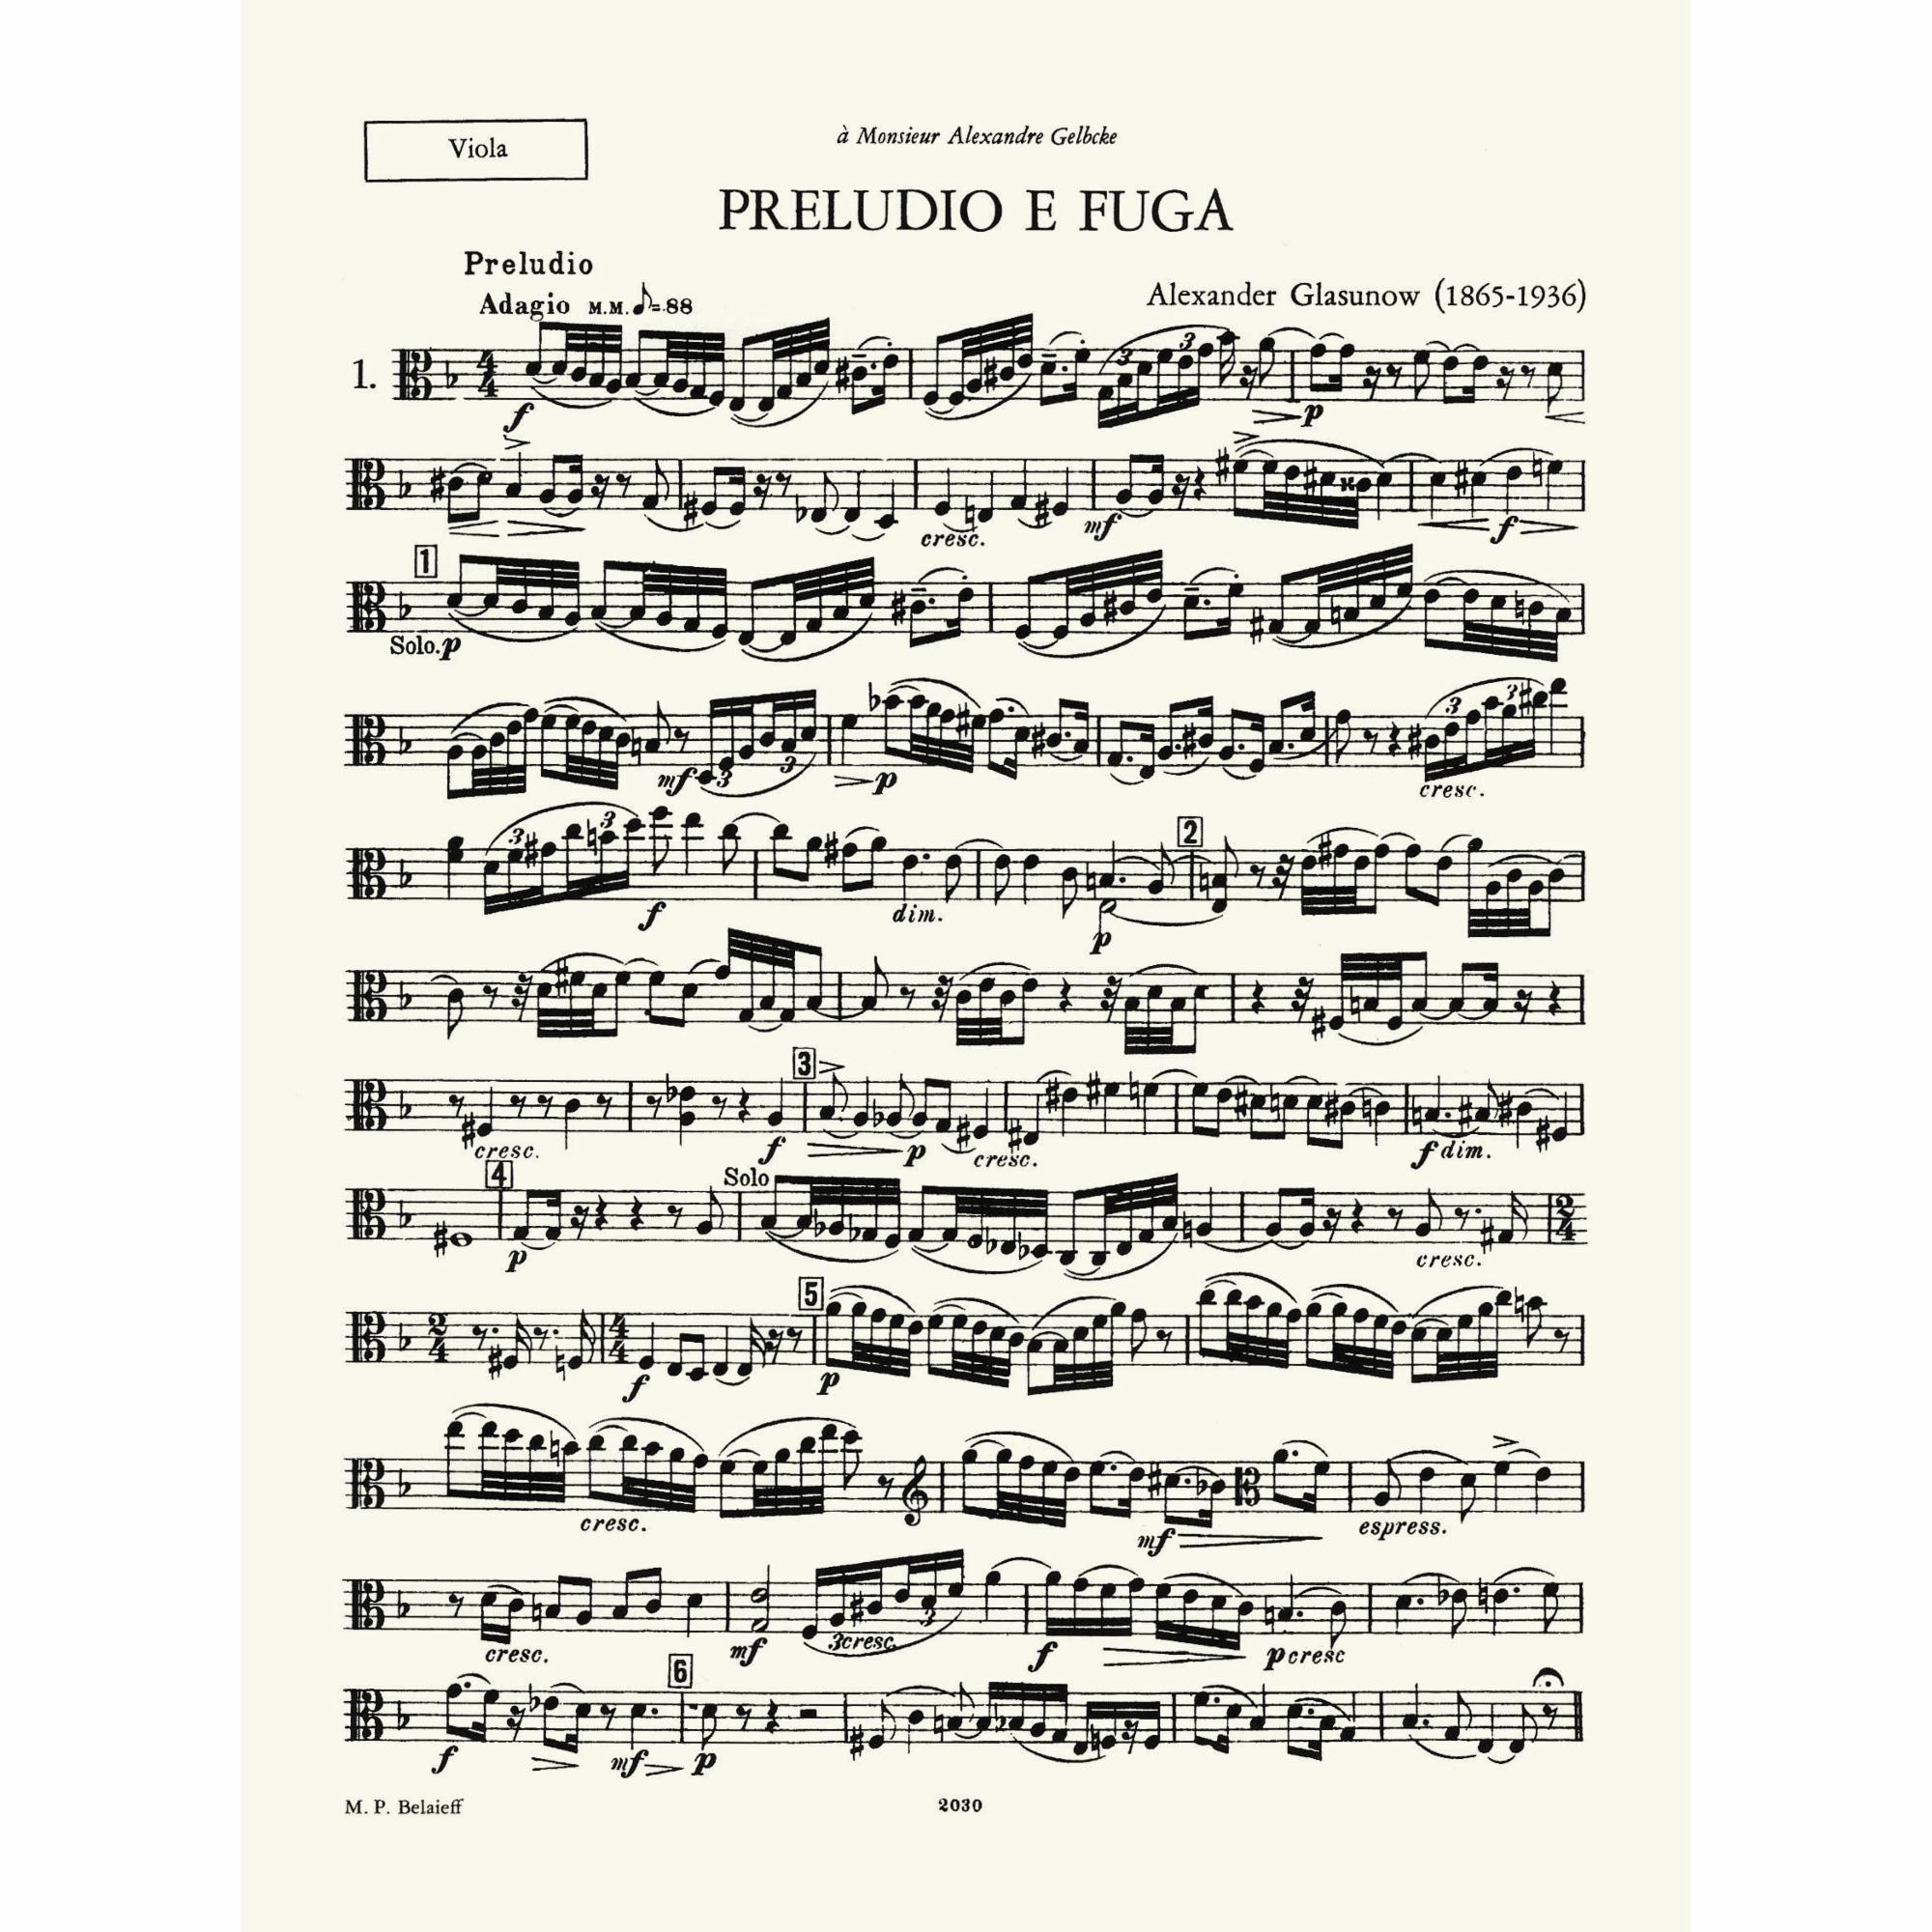 Sample: Vol. I, Viola (Pg. 1)